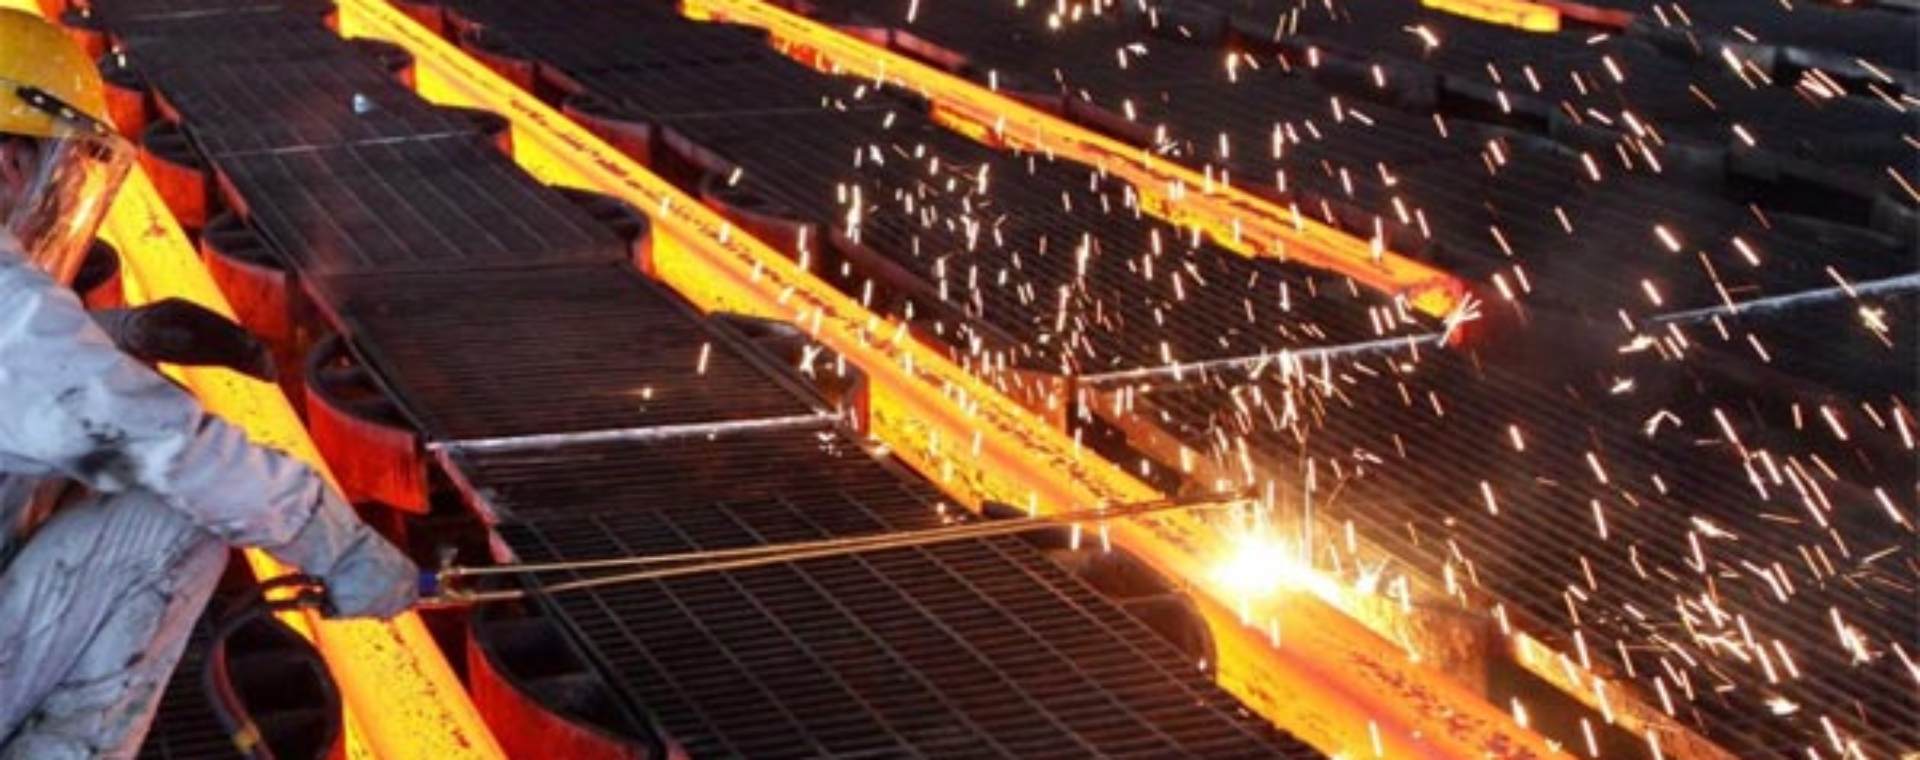 PT Tsingshan Steel Indonesia di Morowali menggunakan proses peleburan blast furnace yang matang, dengan karakteristik biaya yang rendah, hasil produksi yang tinggi, teknologi yang matang, dan risiko teknik rendah.  - imip.co.di. Raksasa Baja dan Nikel Asal China Bakal Lego Asetnya di Morowali